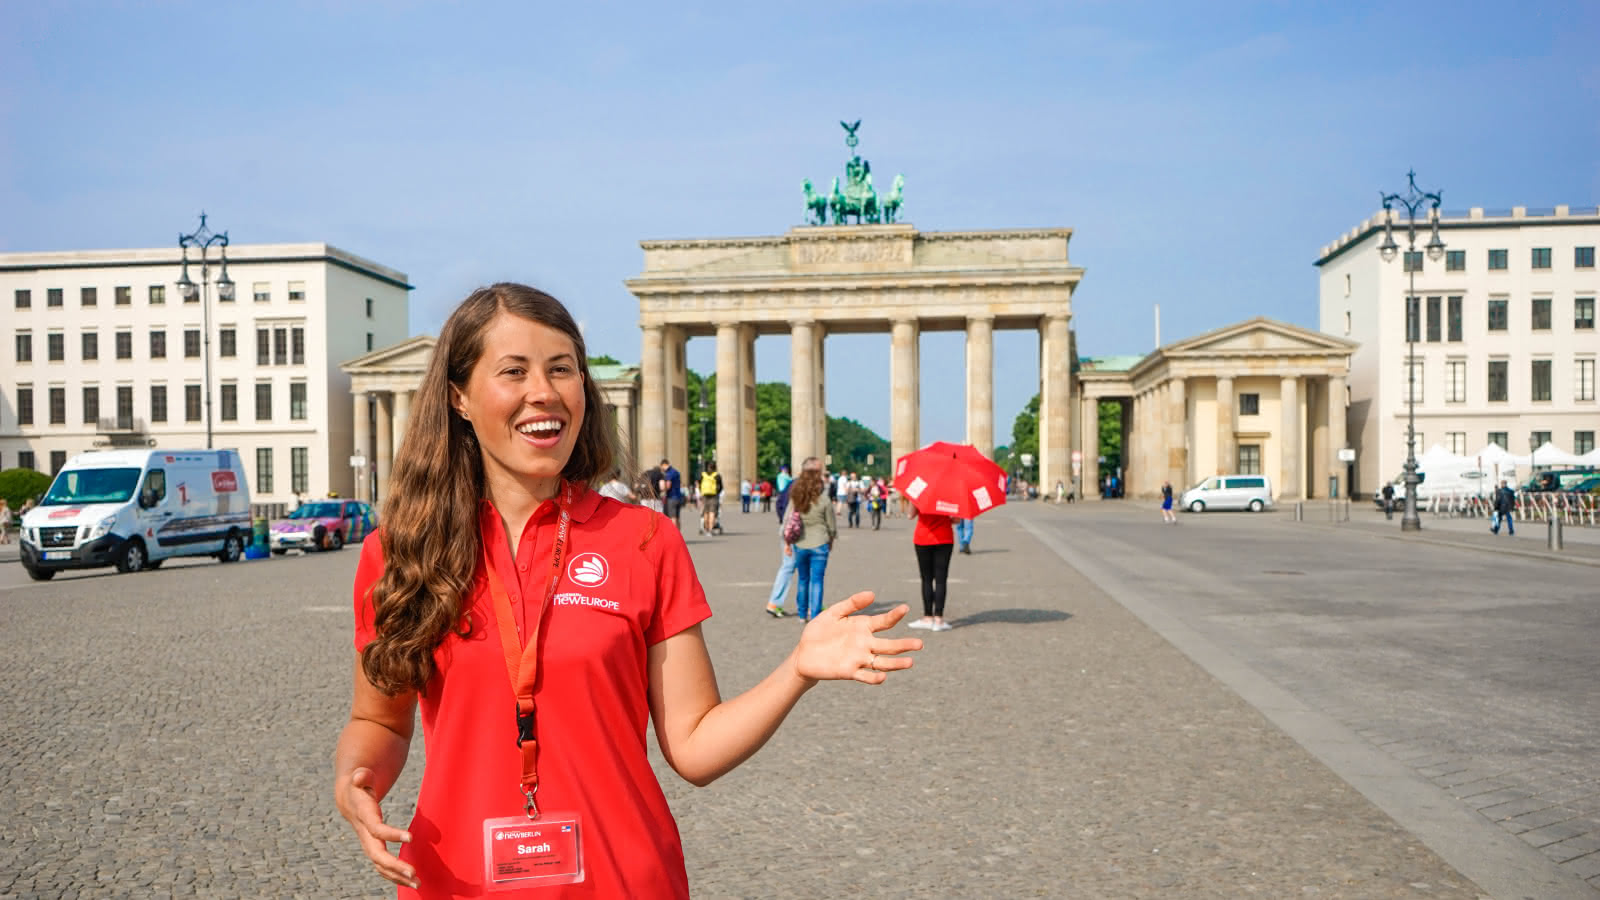 Berlin Local Guide at the Brandenburg Gate